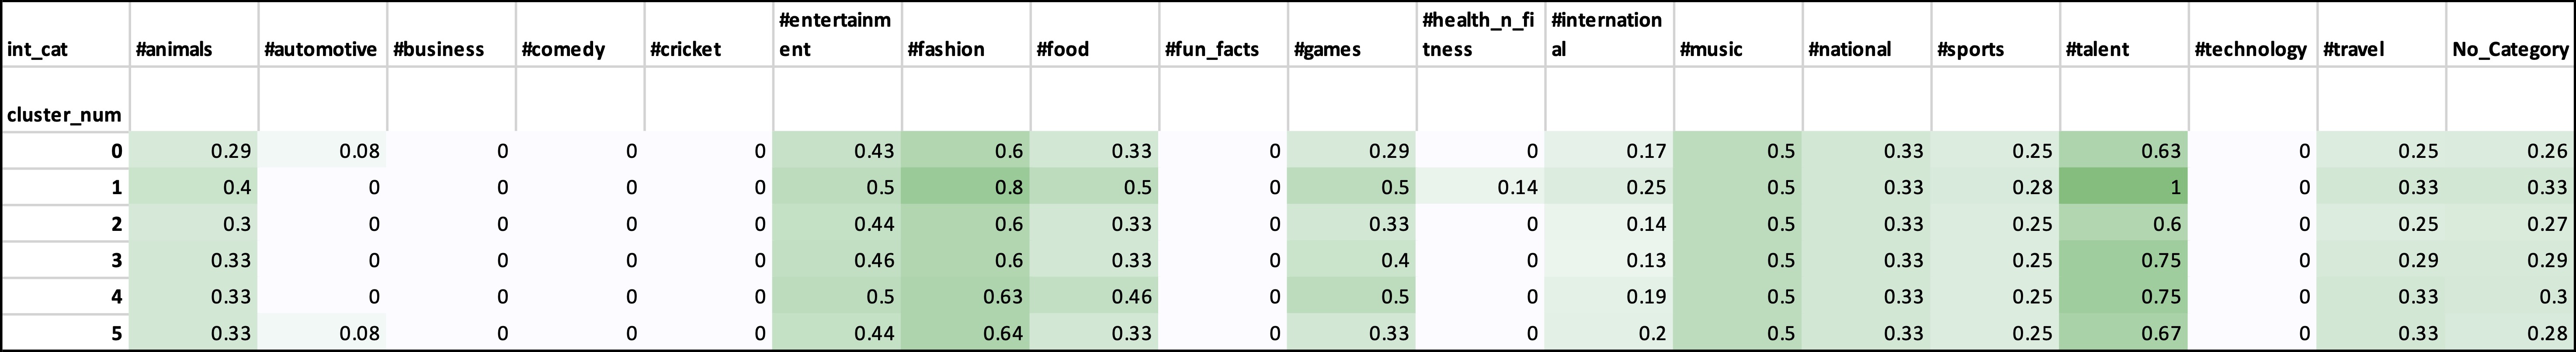 Median Interaction Score Matrix along Categories